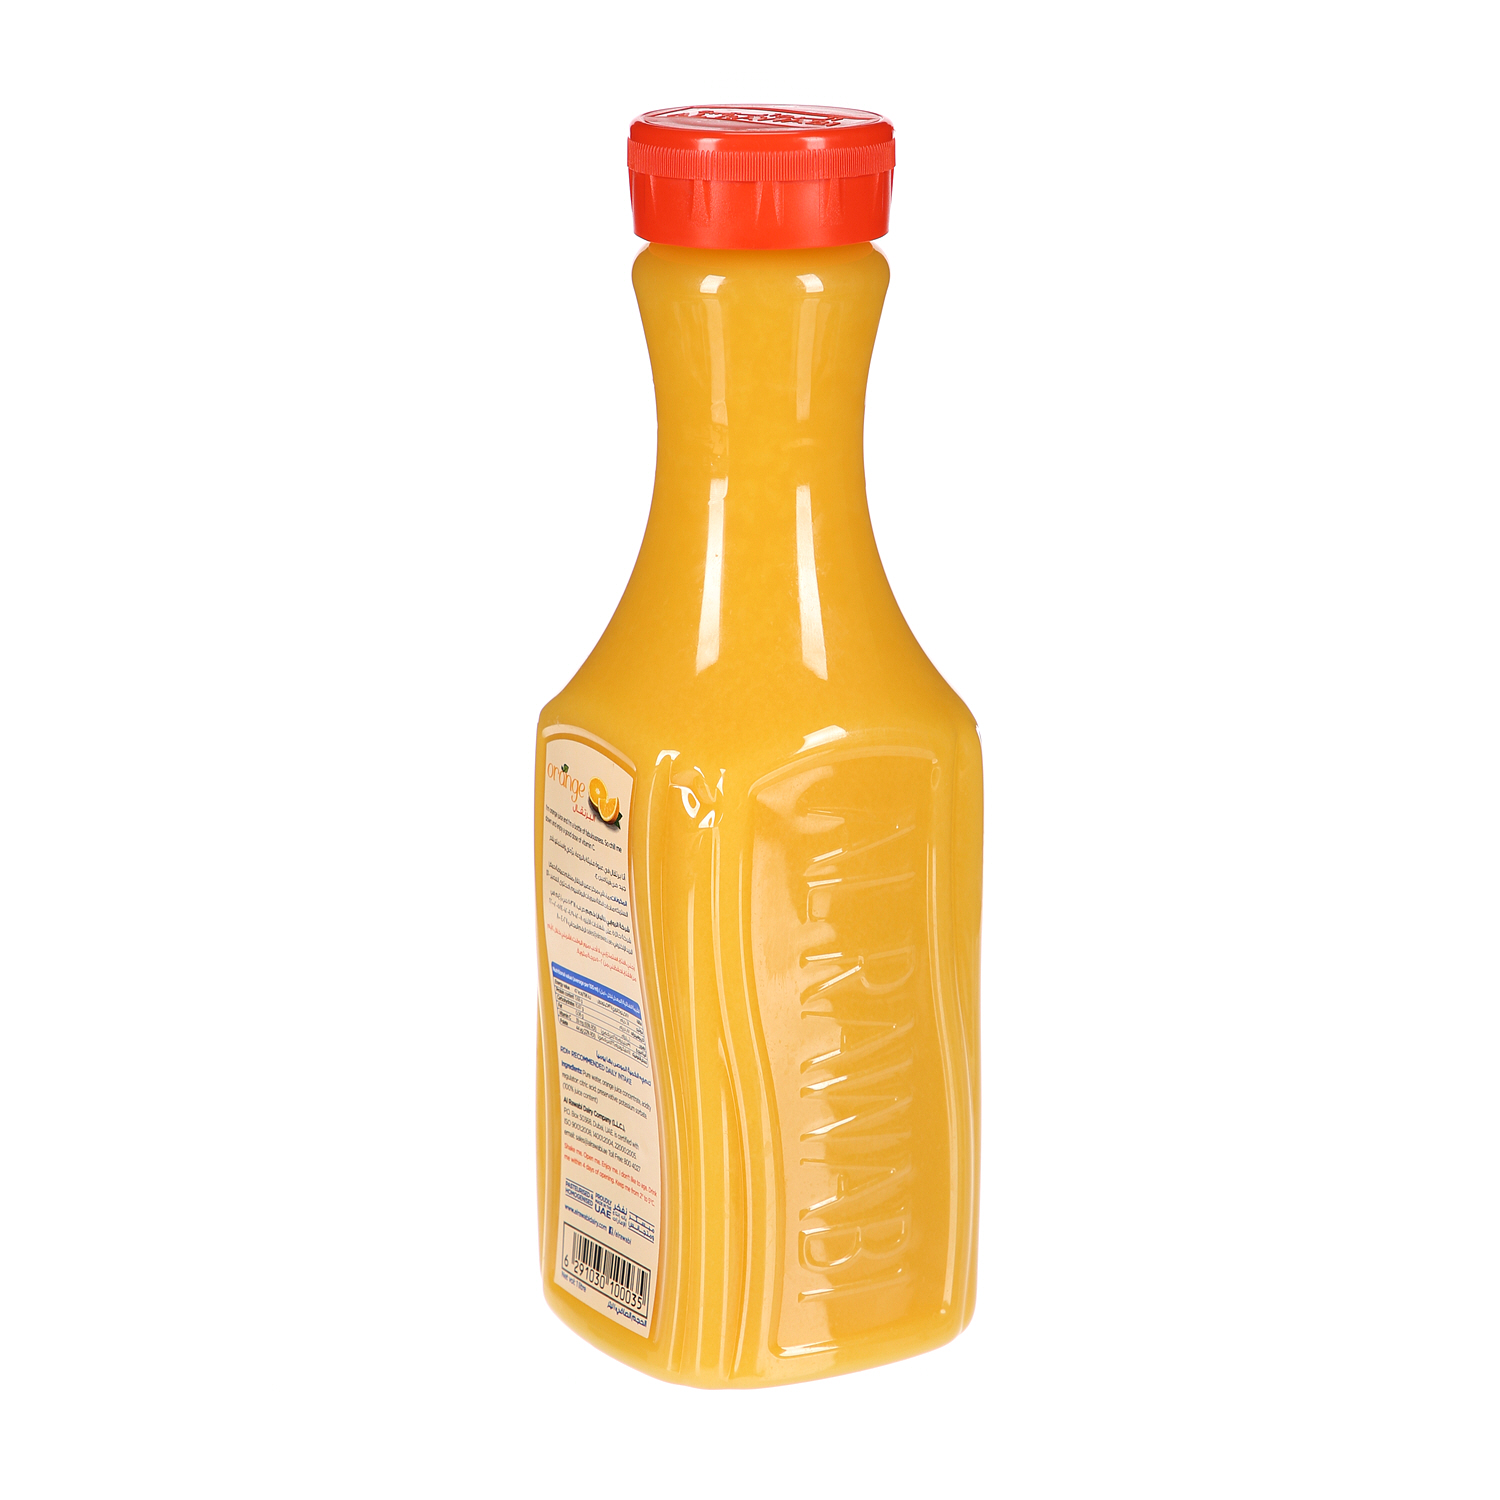 Al Rawabi Orange Juice 1Ltr